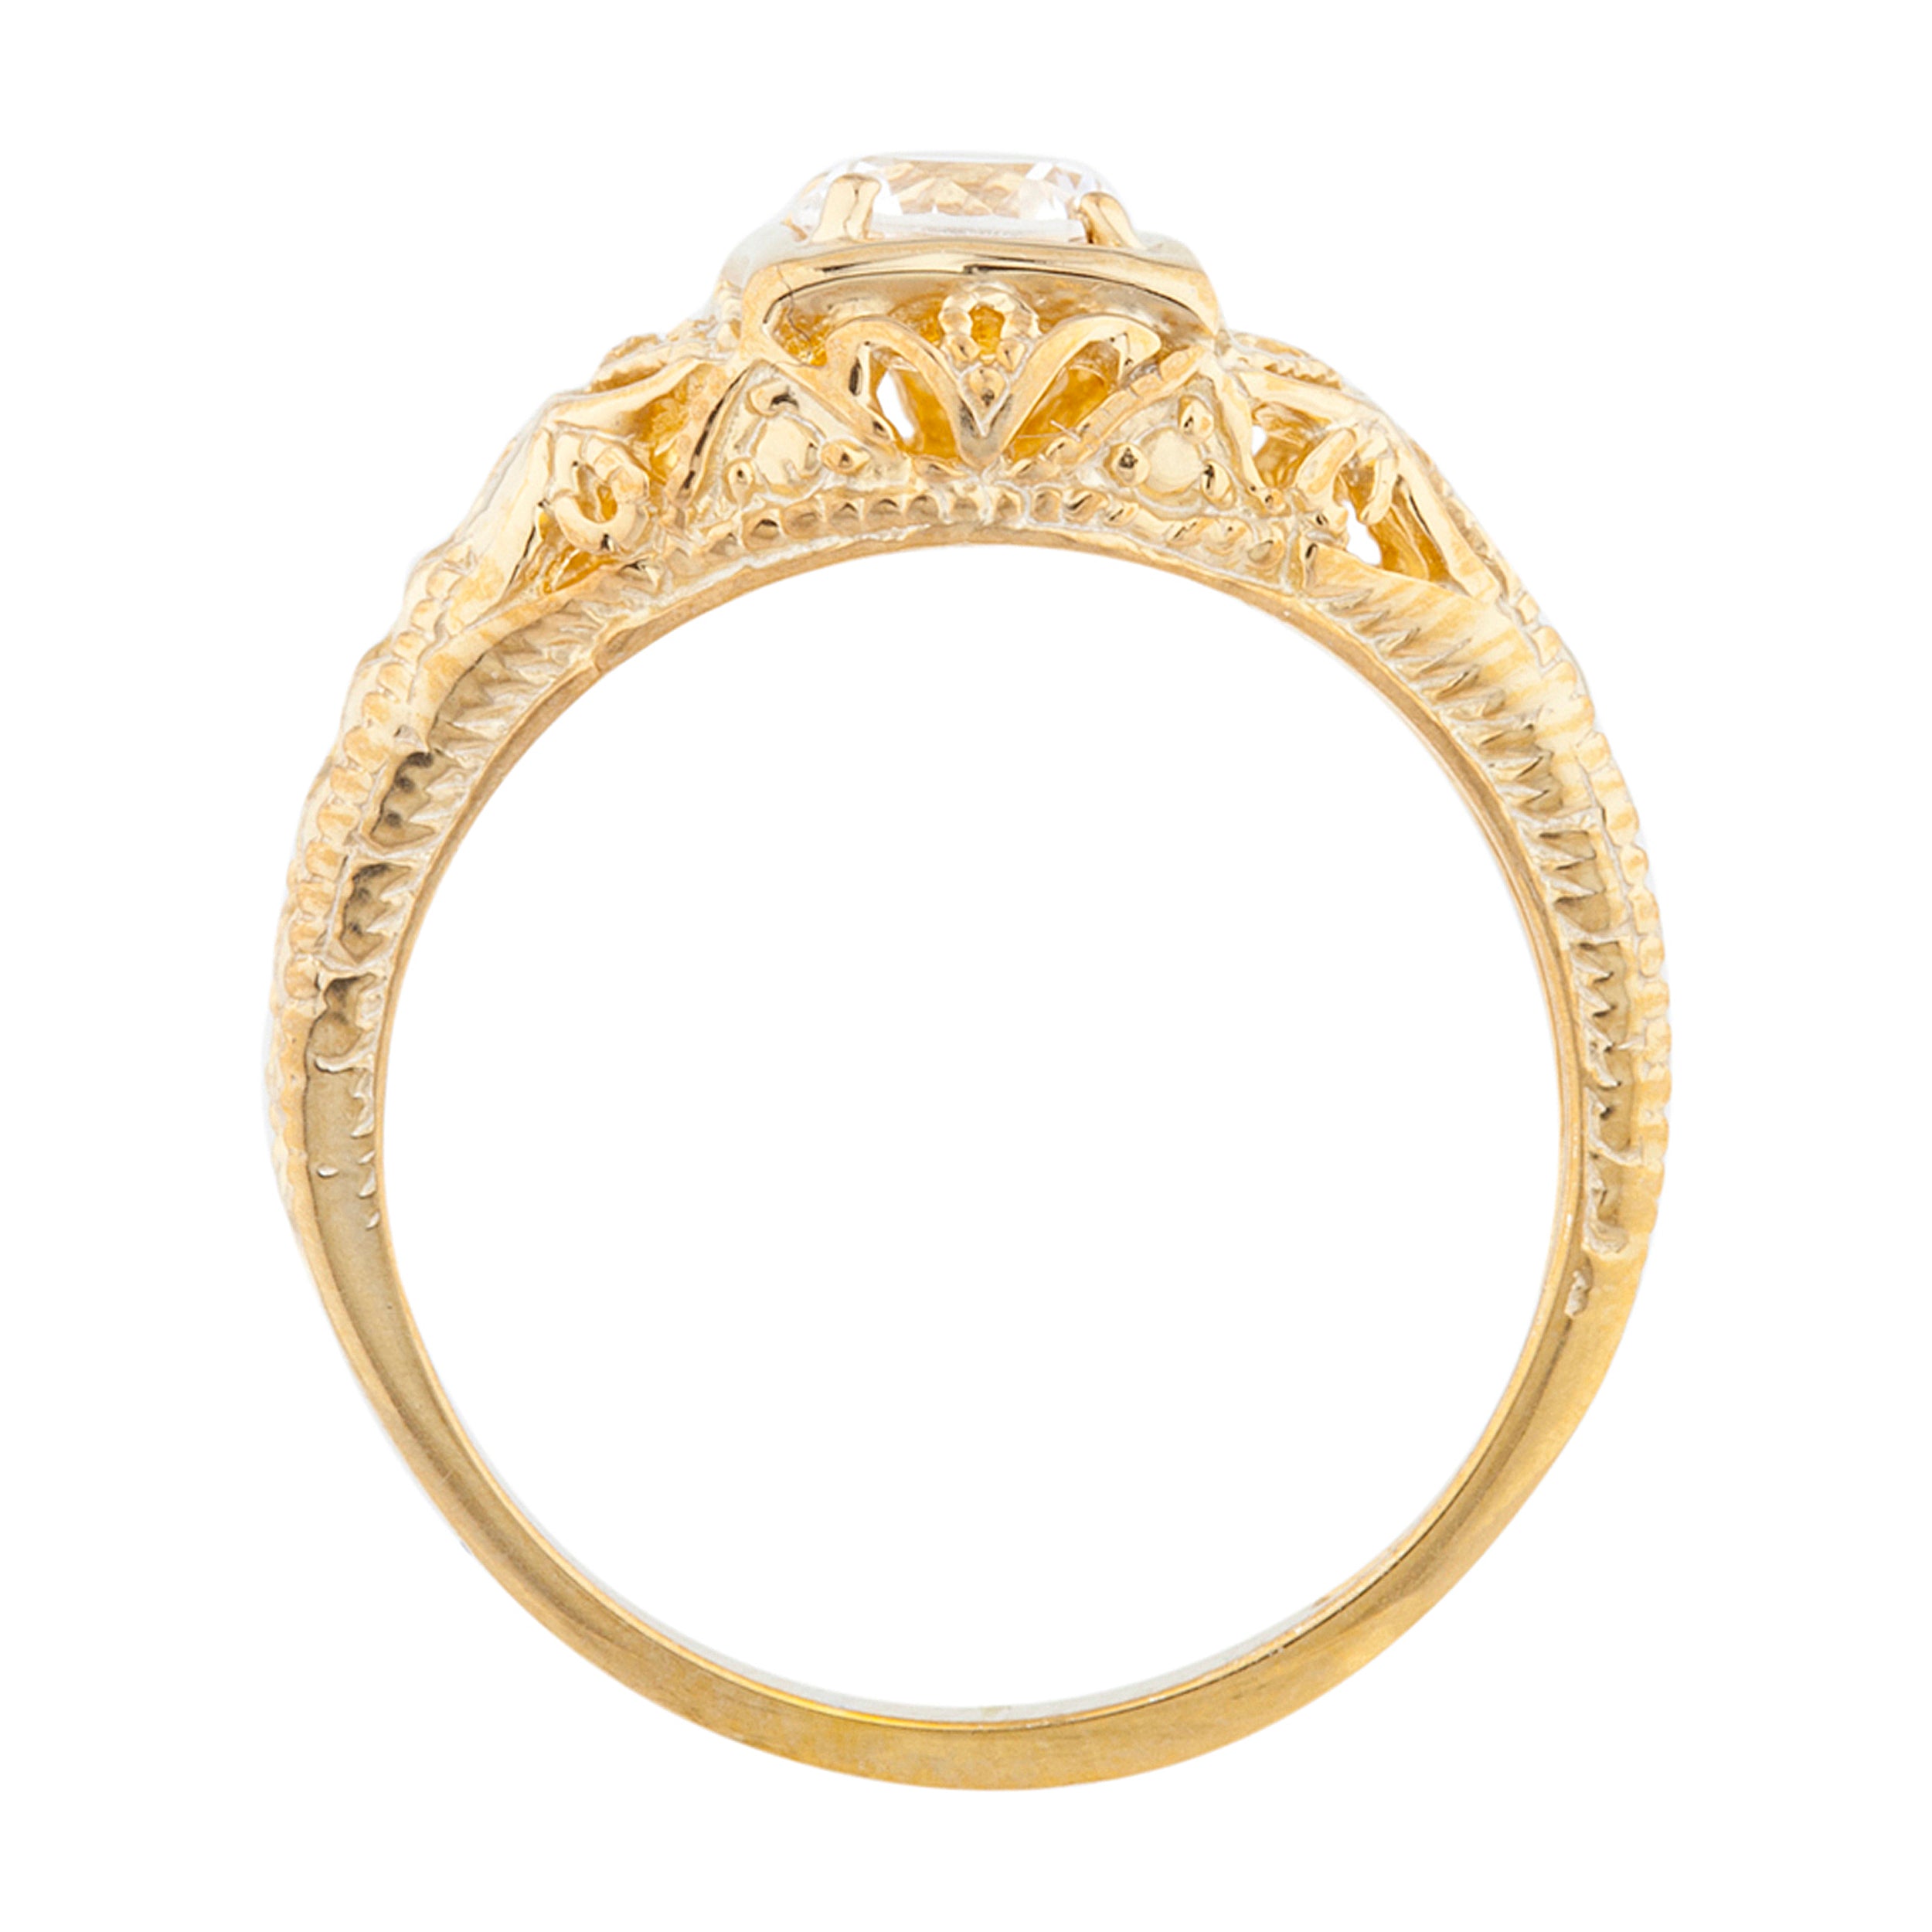 14Kt Gold Genuine Black Onyx & Diamond Design Round Ring